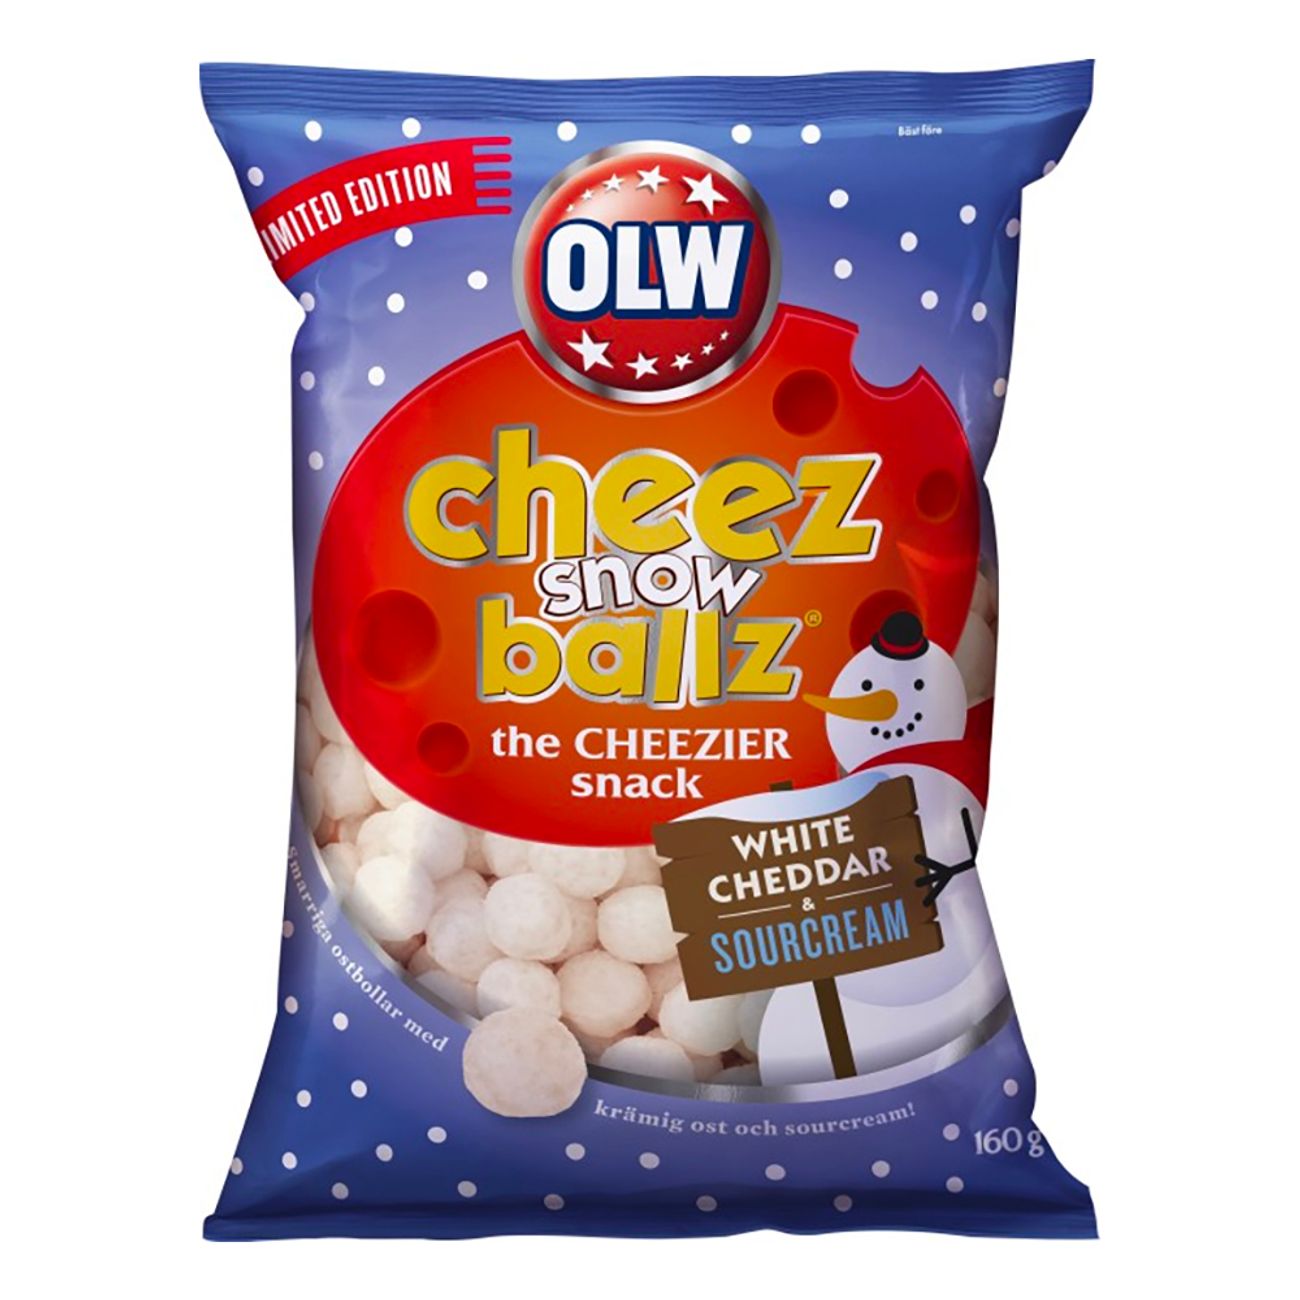 olw-cheez-snow-ballz-89976-1